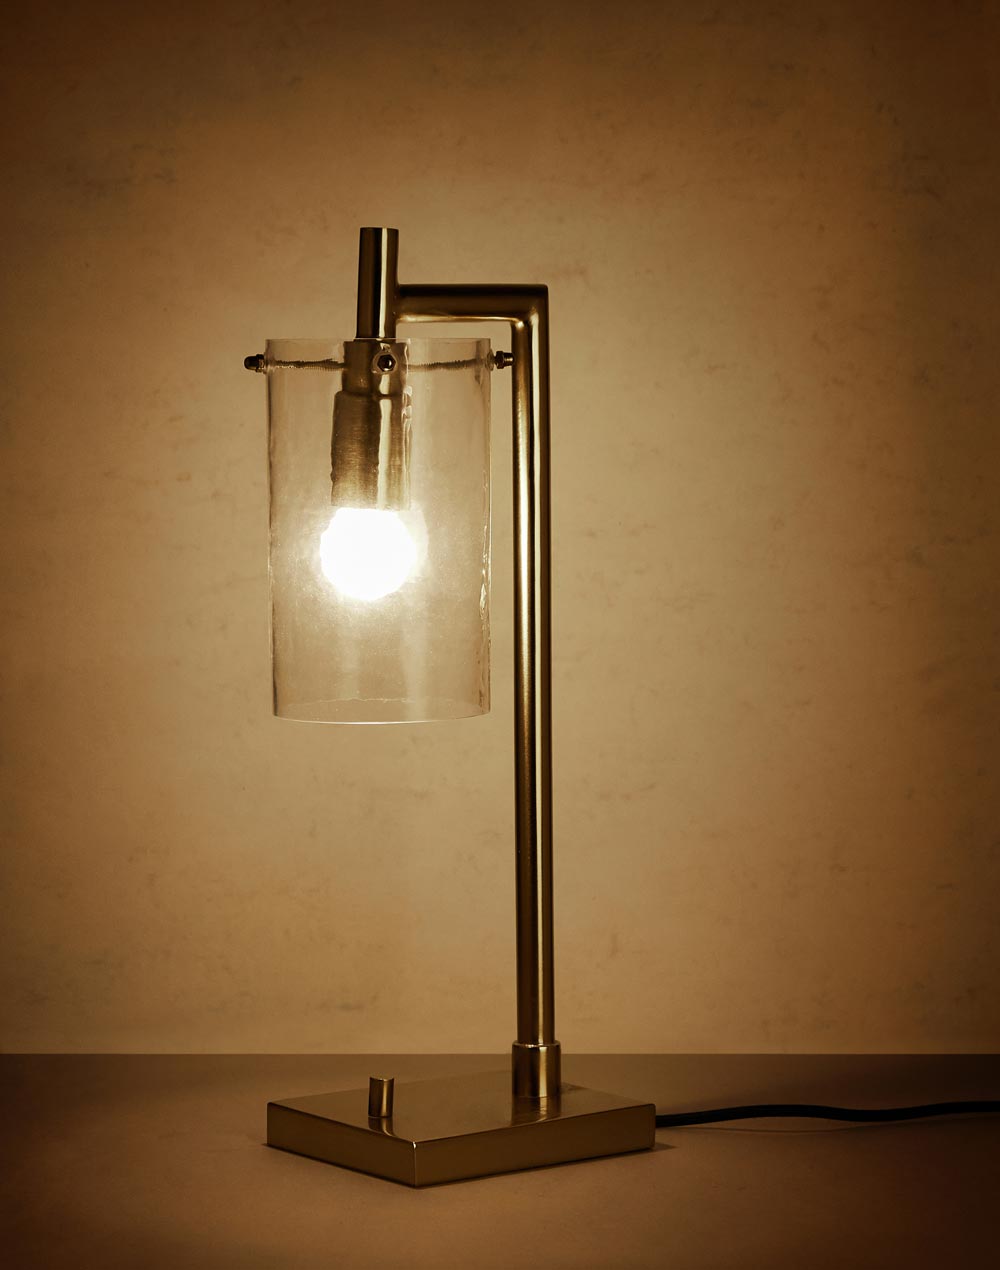 Antiquebrass Avlokanam Metal Study Table Lamp